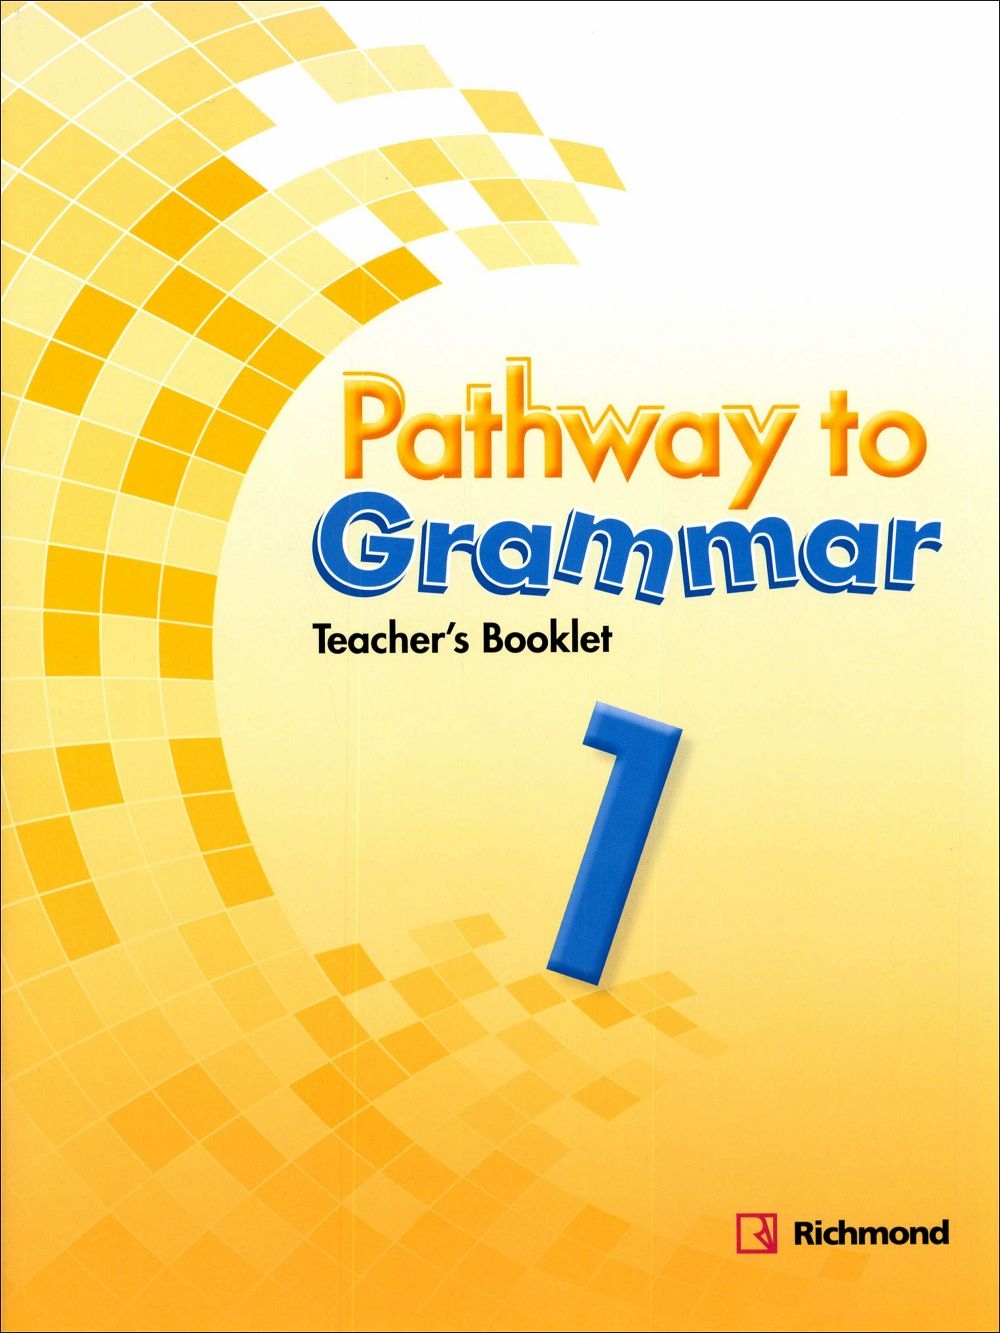 Pathway to Grammar (1) Teacher’s Booklet